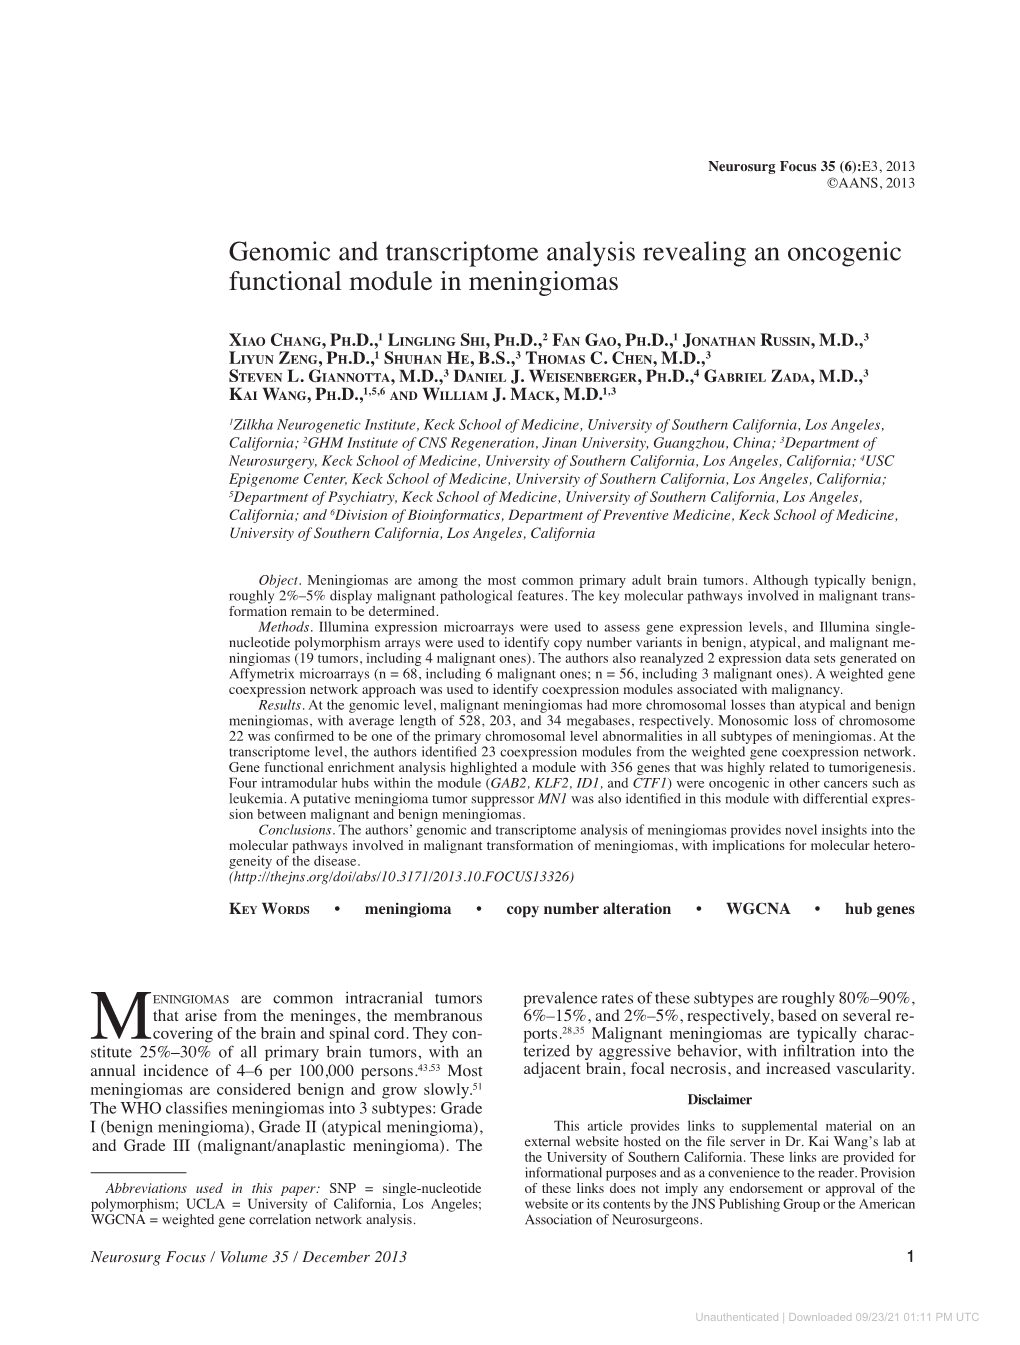 Genomic and Transcriptome Analysis Revealing an Oncogenic Functional Module in Meningiomas